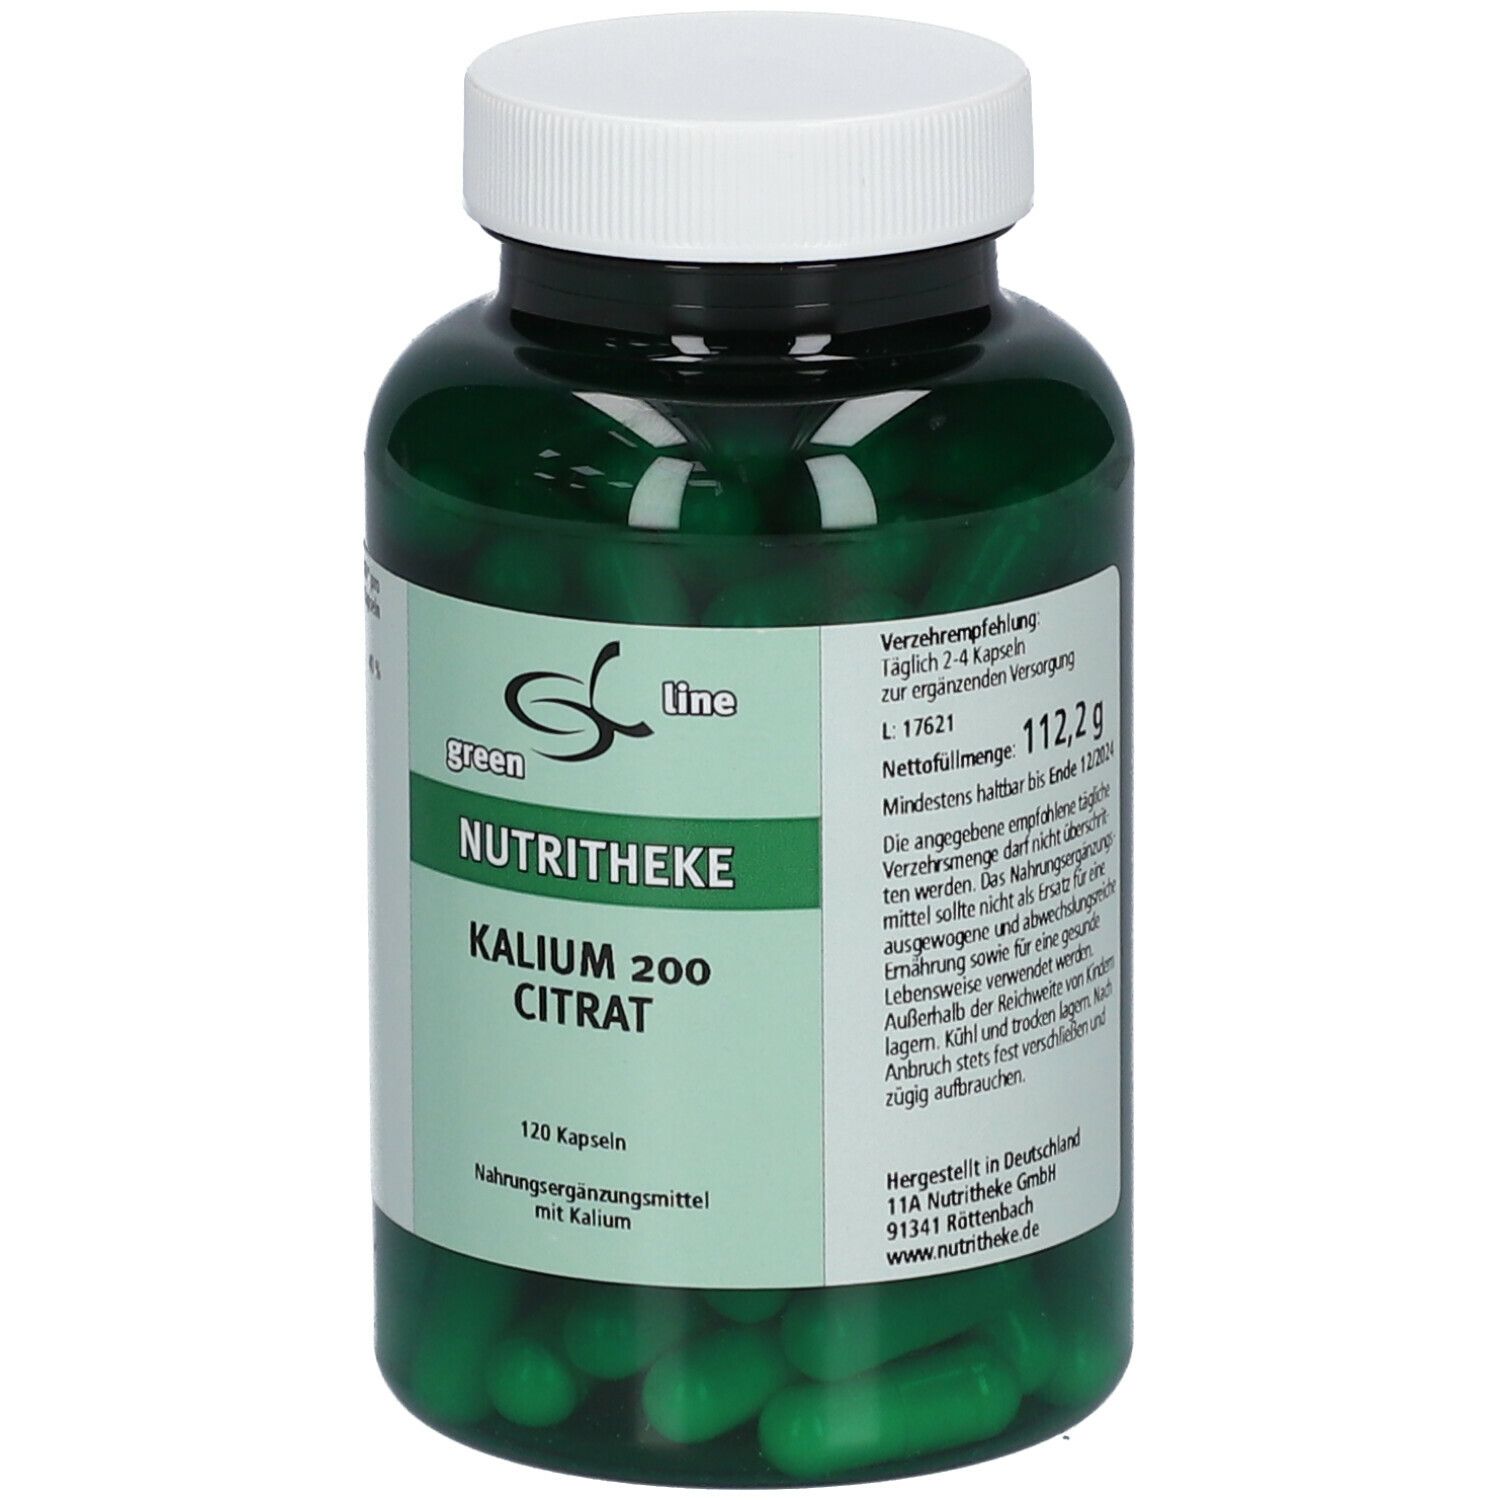 green line Kalium 200 Citrat